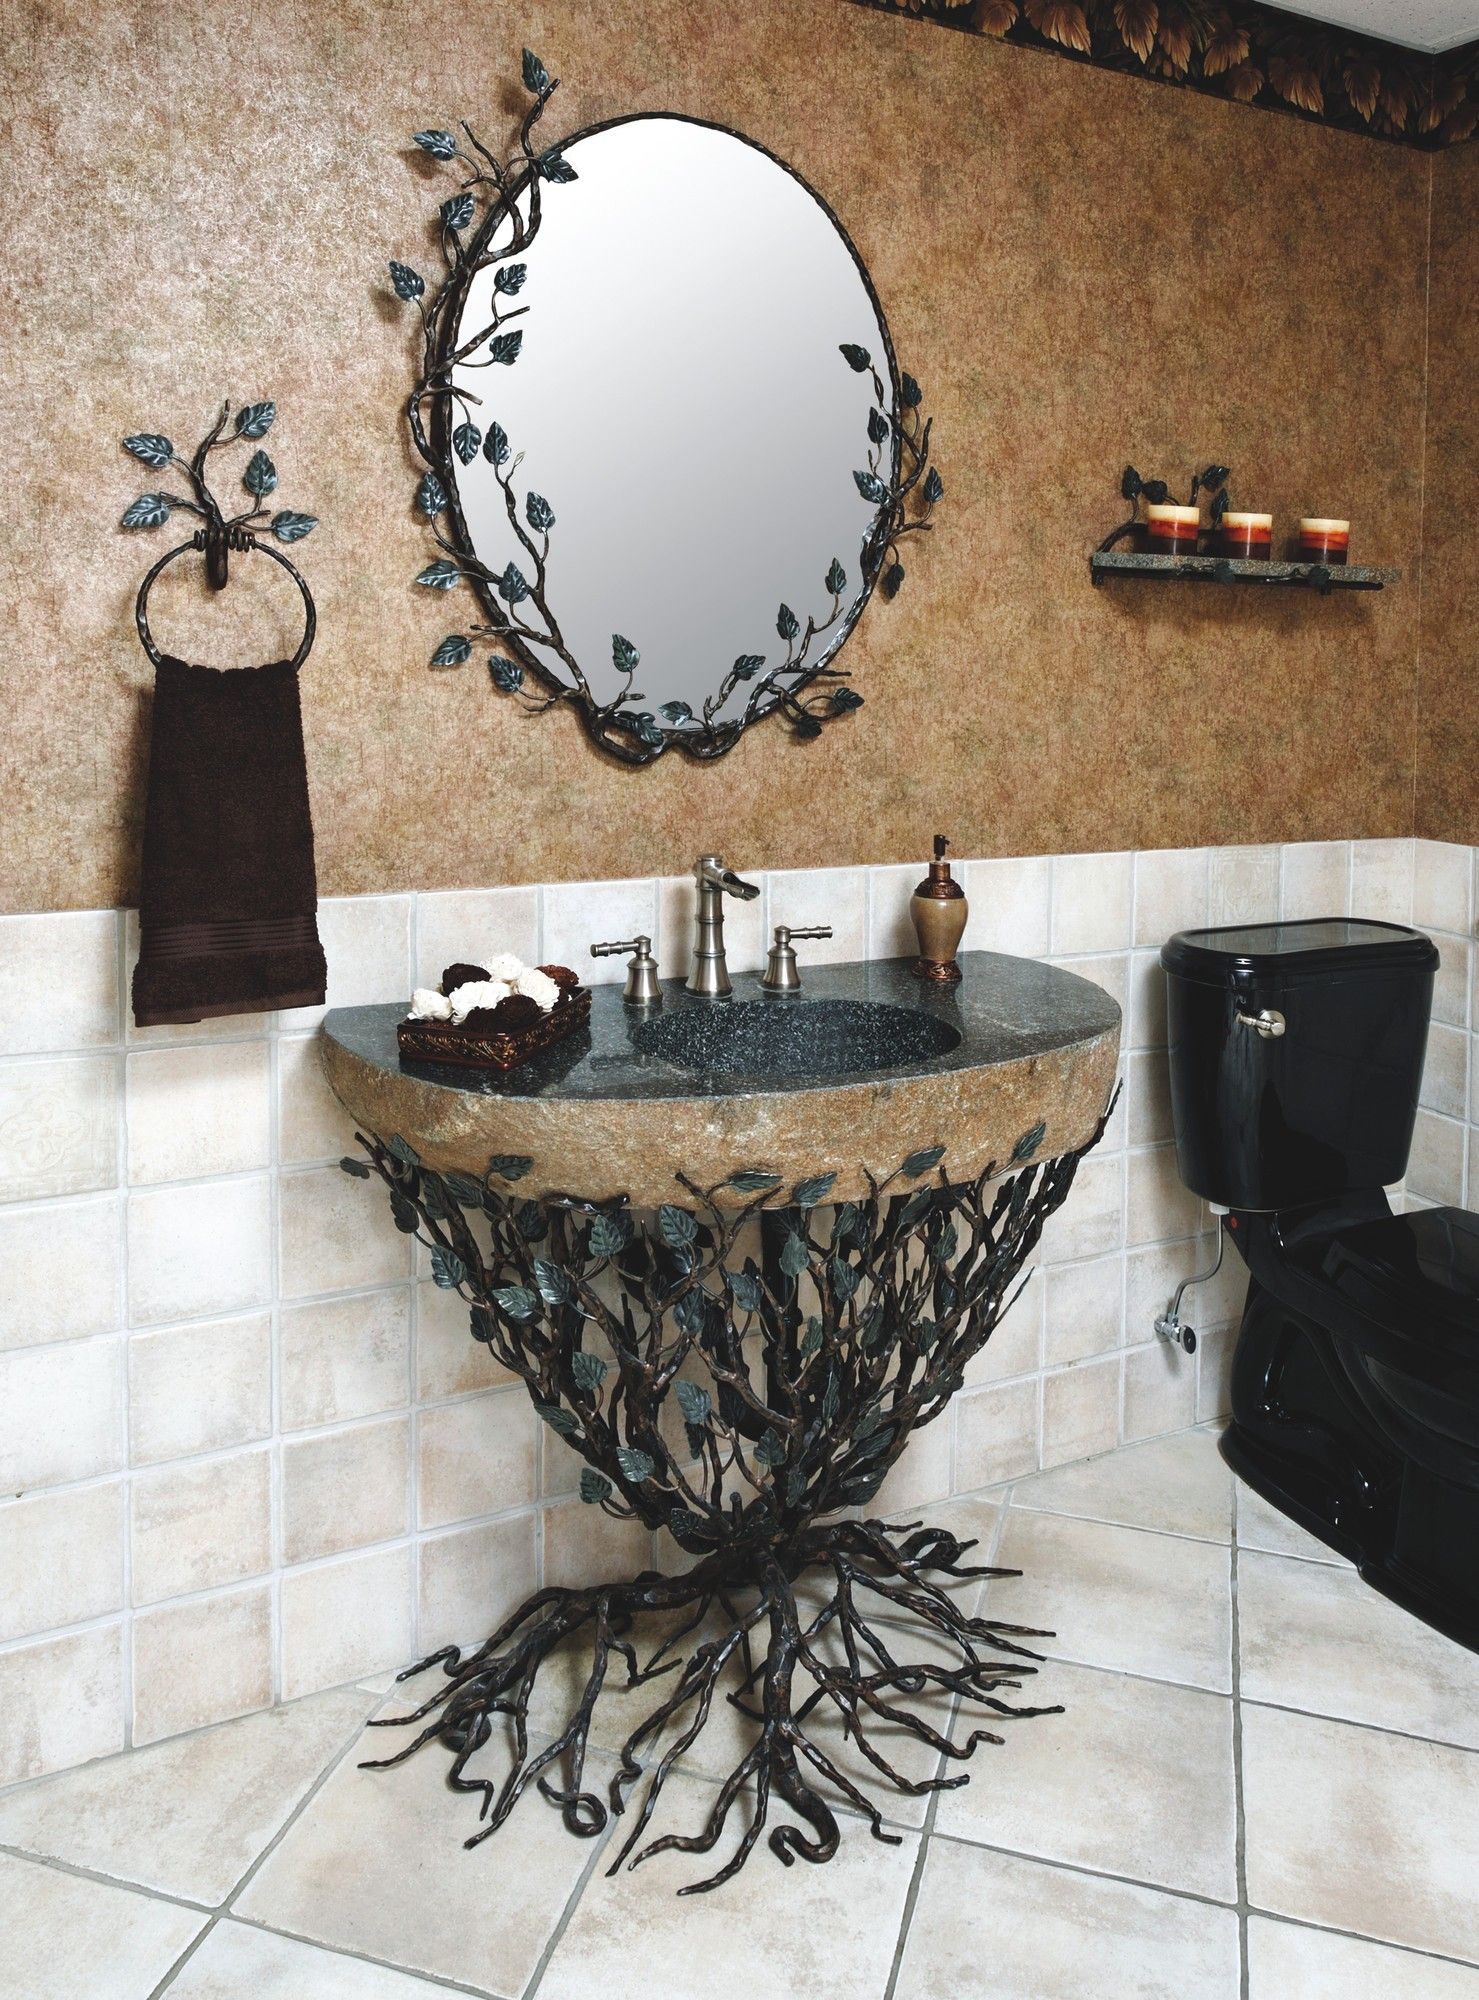 Decorative space-saving vanity with natural motif